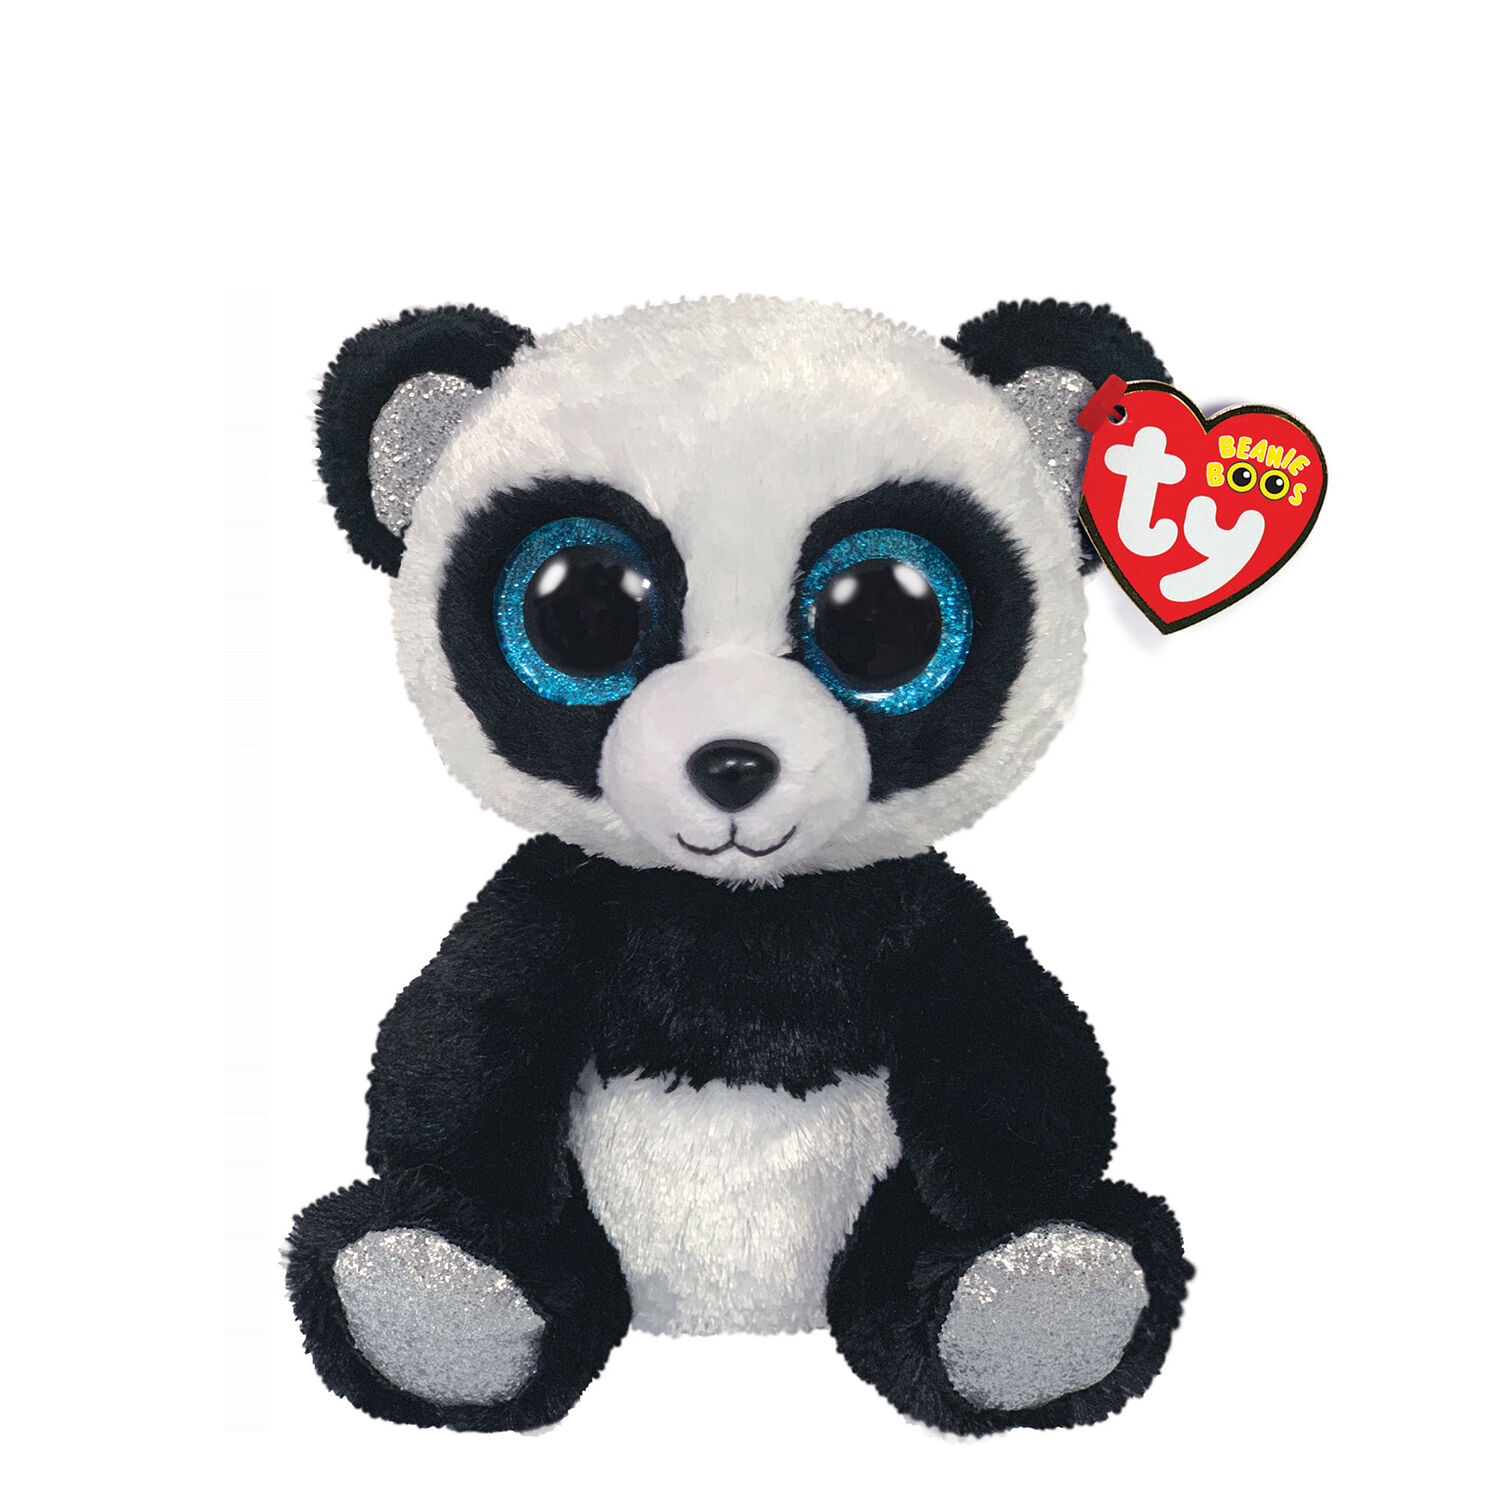 Ty Beanie Boos Bamboo Black & White Panda 3" Plush Toy Key Clip 36502 for sale online 